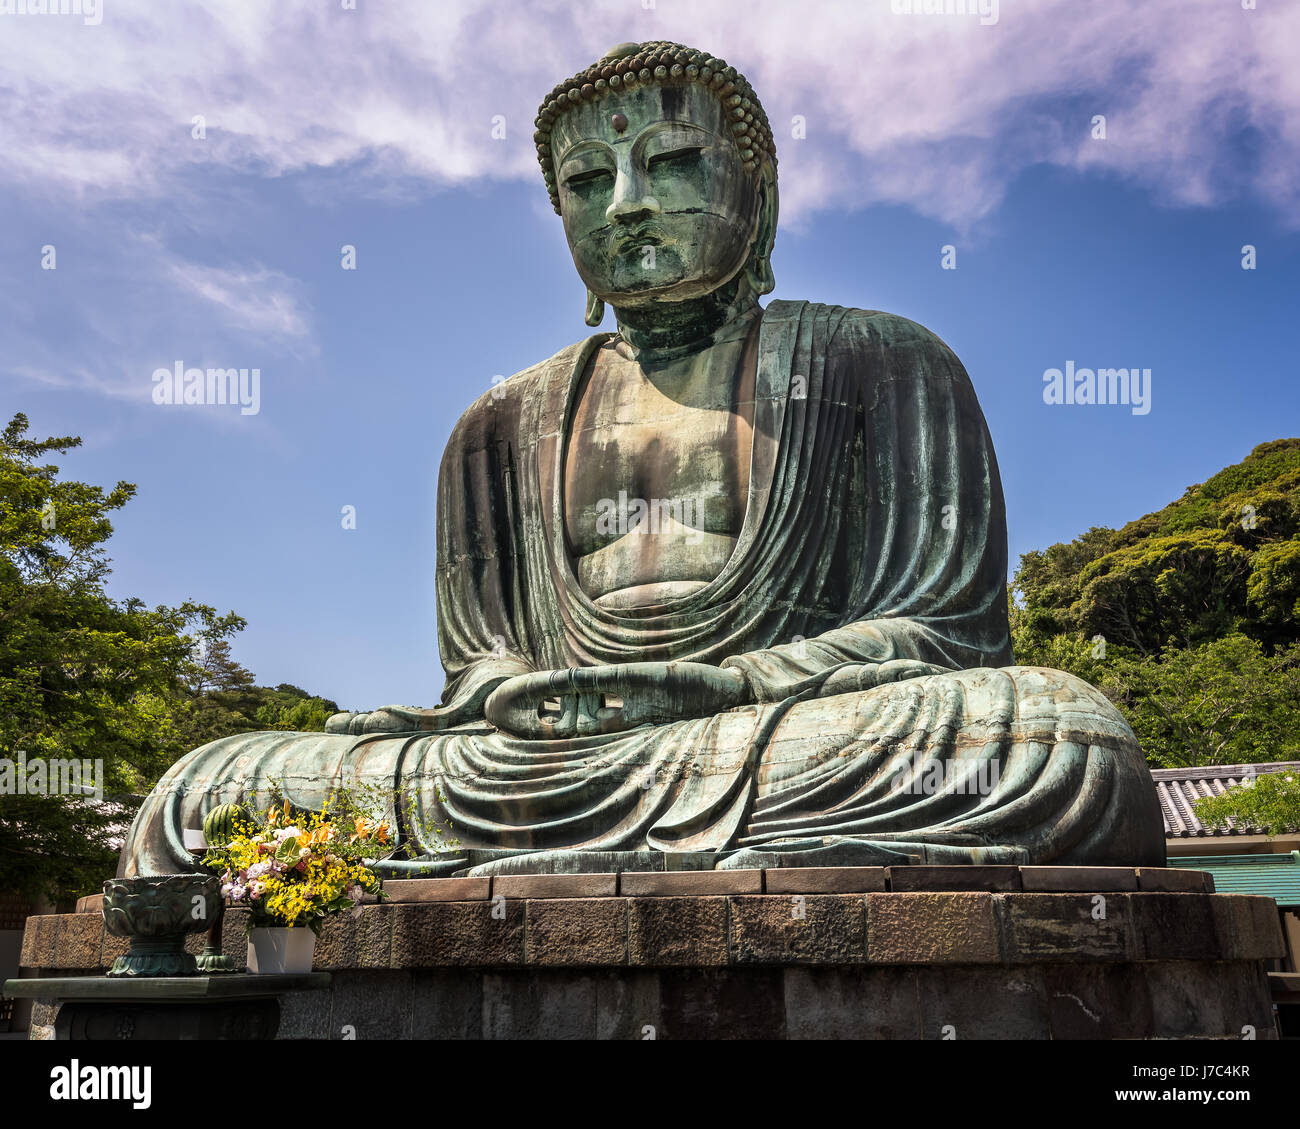 Der große Buddha von Kamakura (Kamakura Daibutsu), eine Bronzestatue des Amida Buddha im Kotokuin Tempel, Kamakura, Kanagawa, Japan Stockfoto